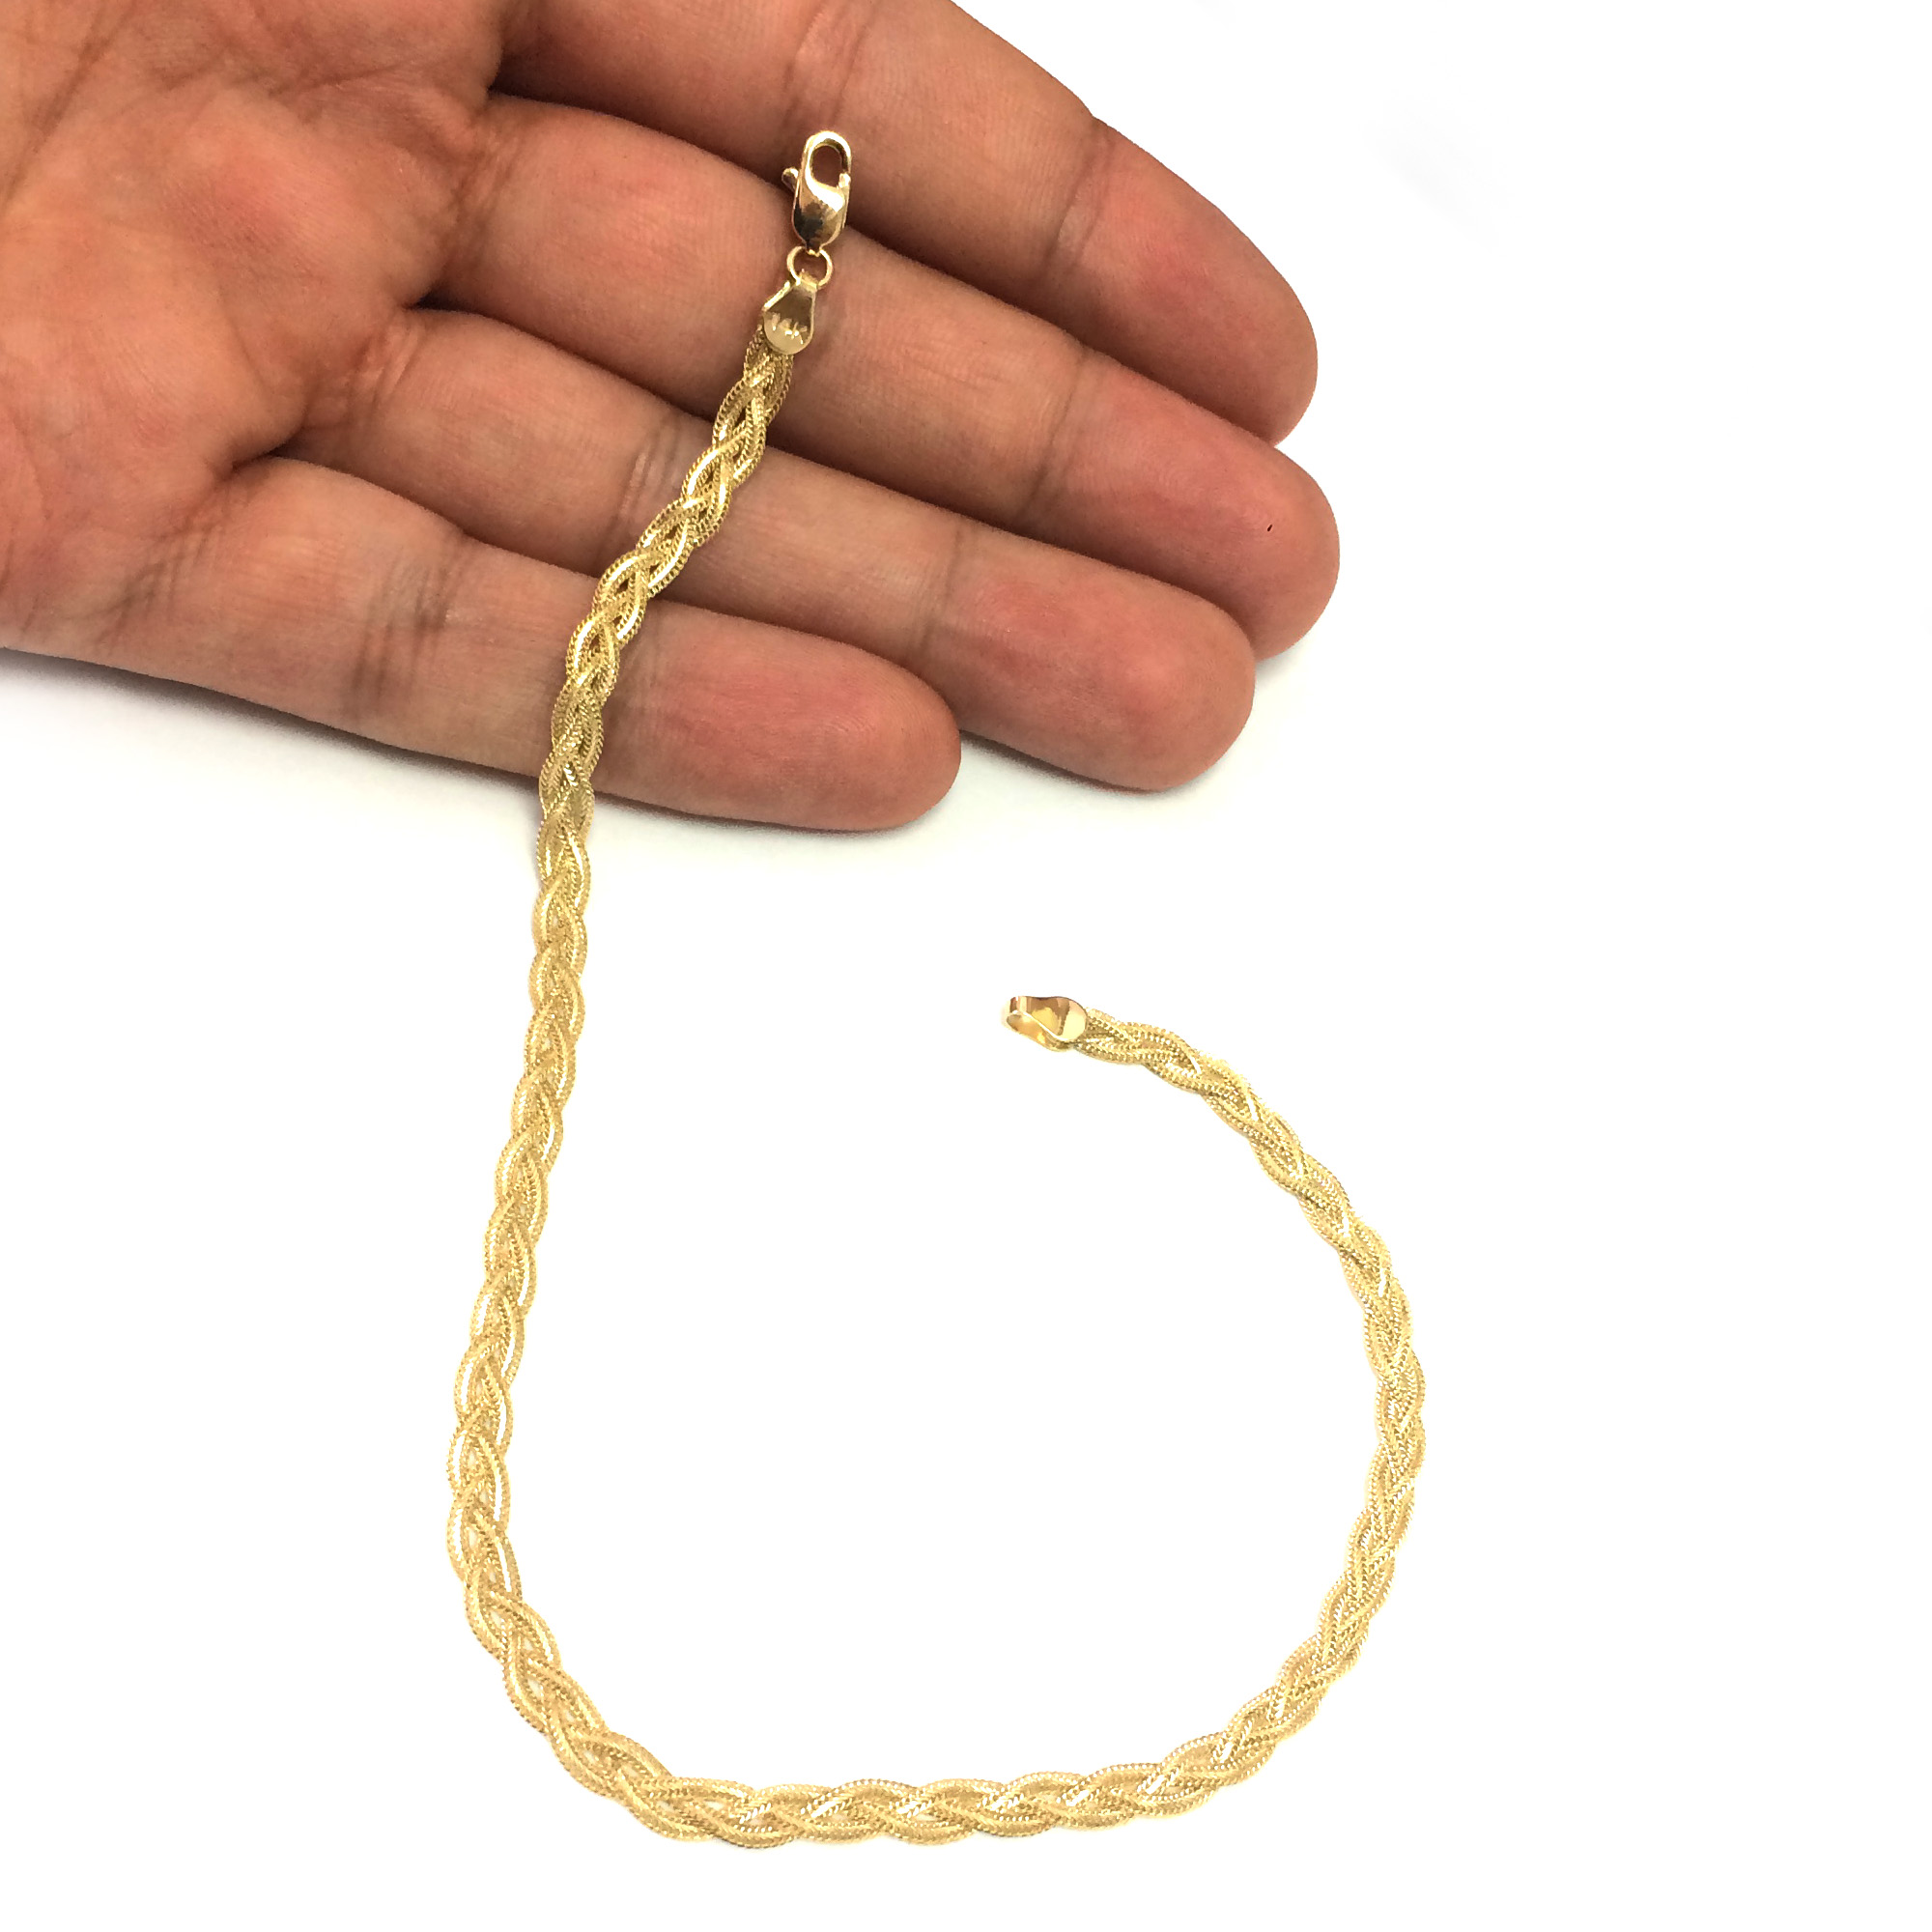 Jewelry Affairs 14K Yellow Gold Diamond Cut Braided Fox Chain Anklet, 10"